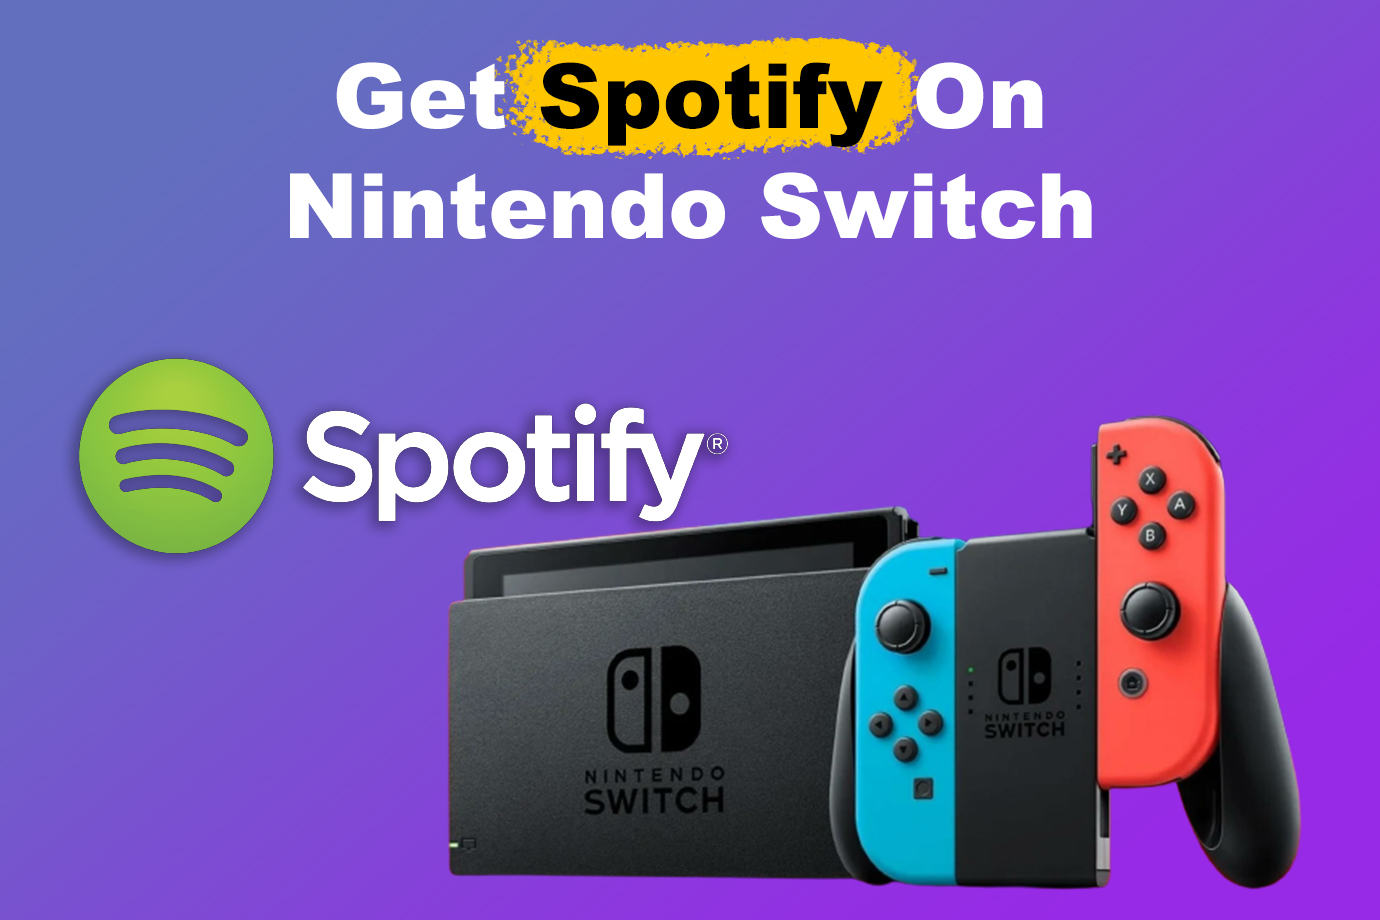 Get Spotify on Nintendo Switch